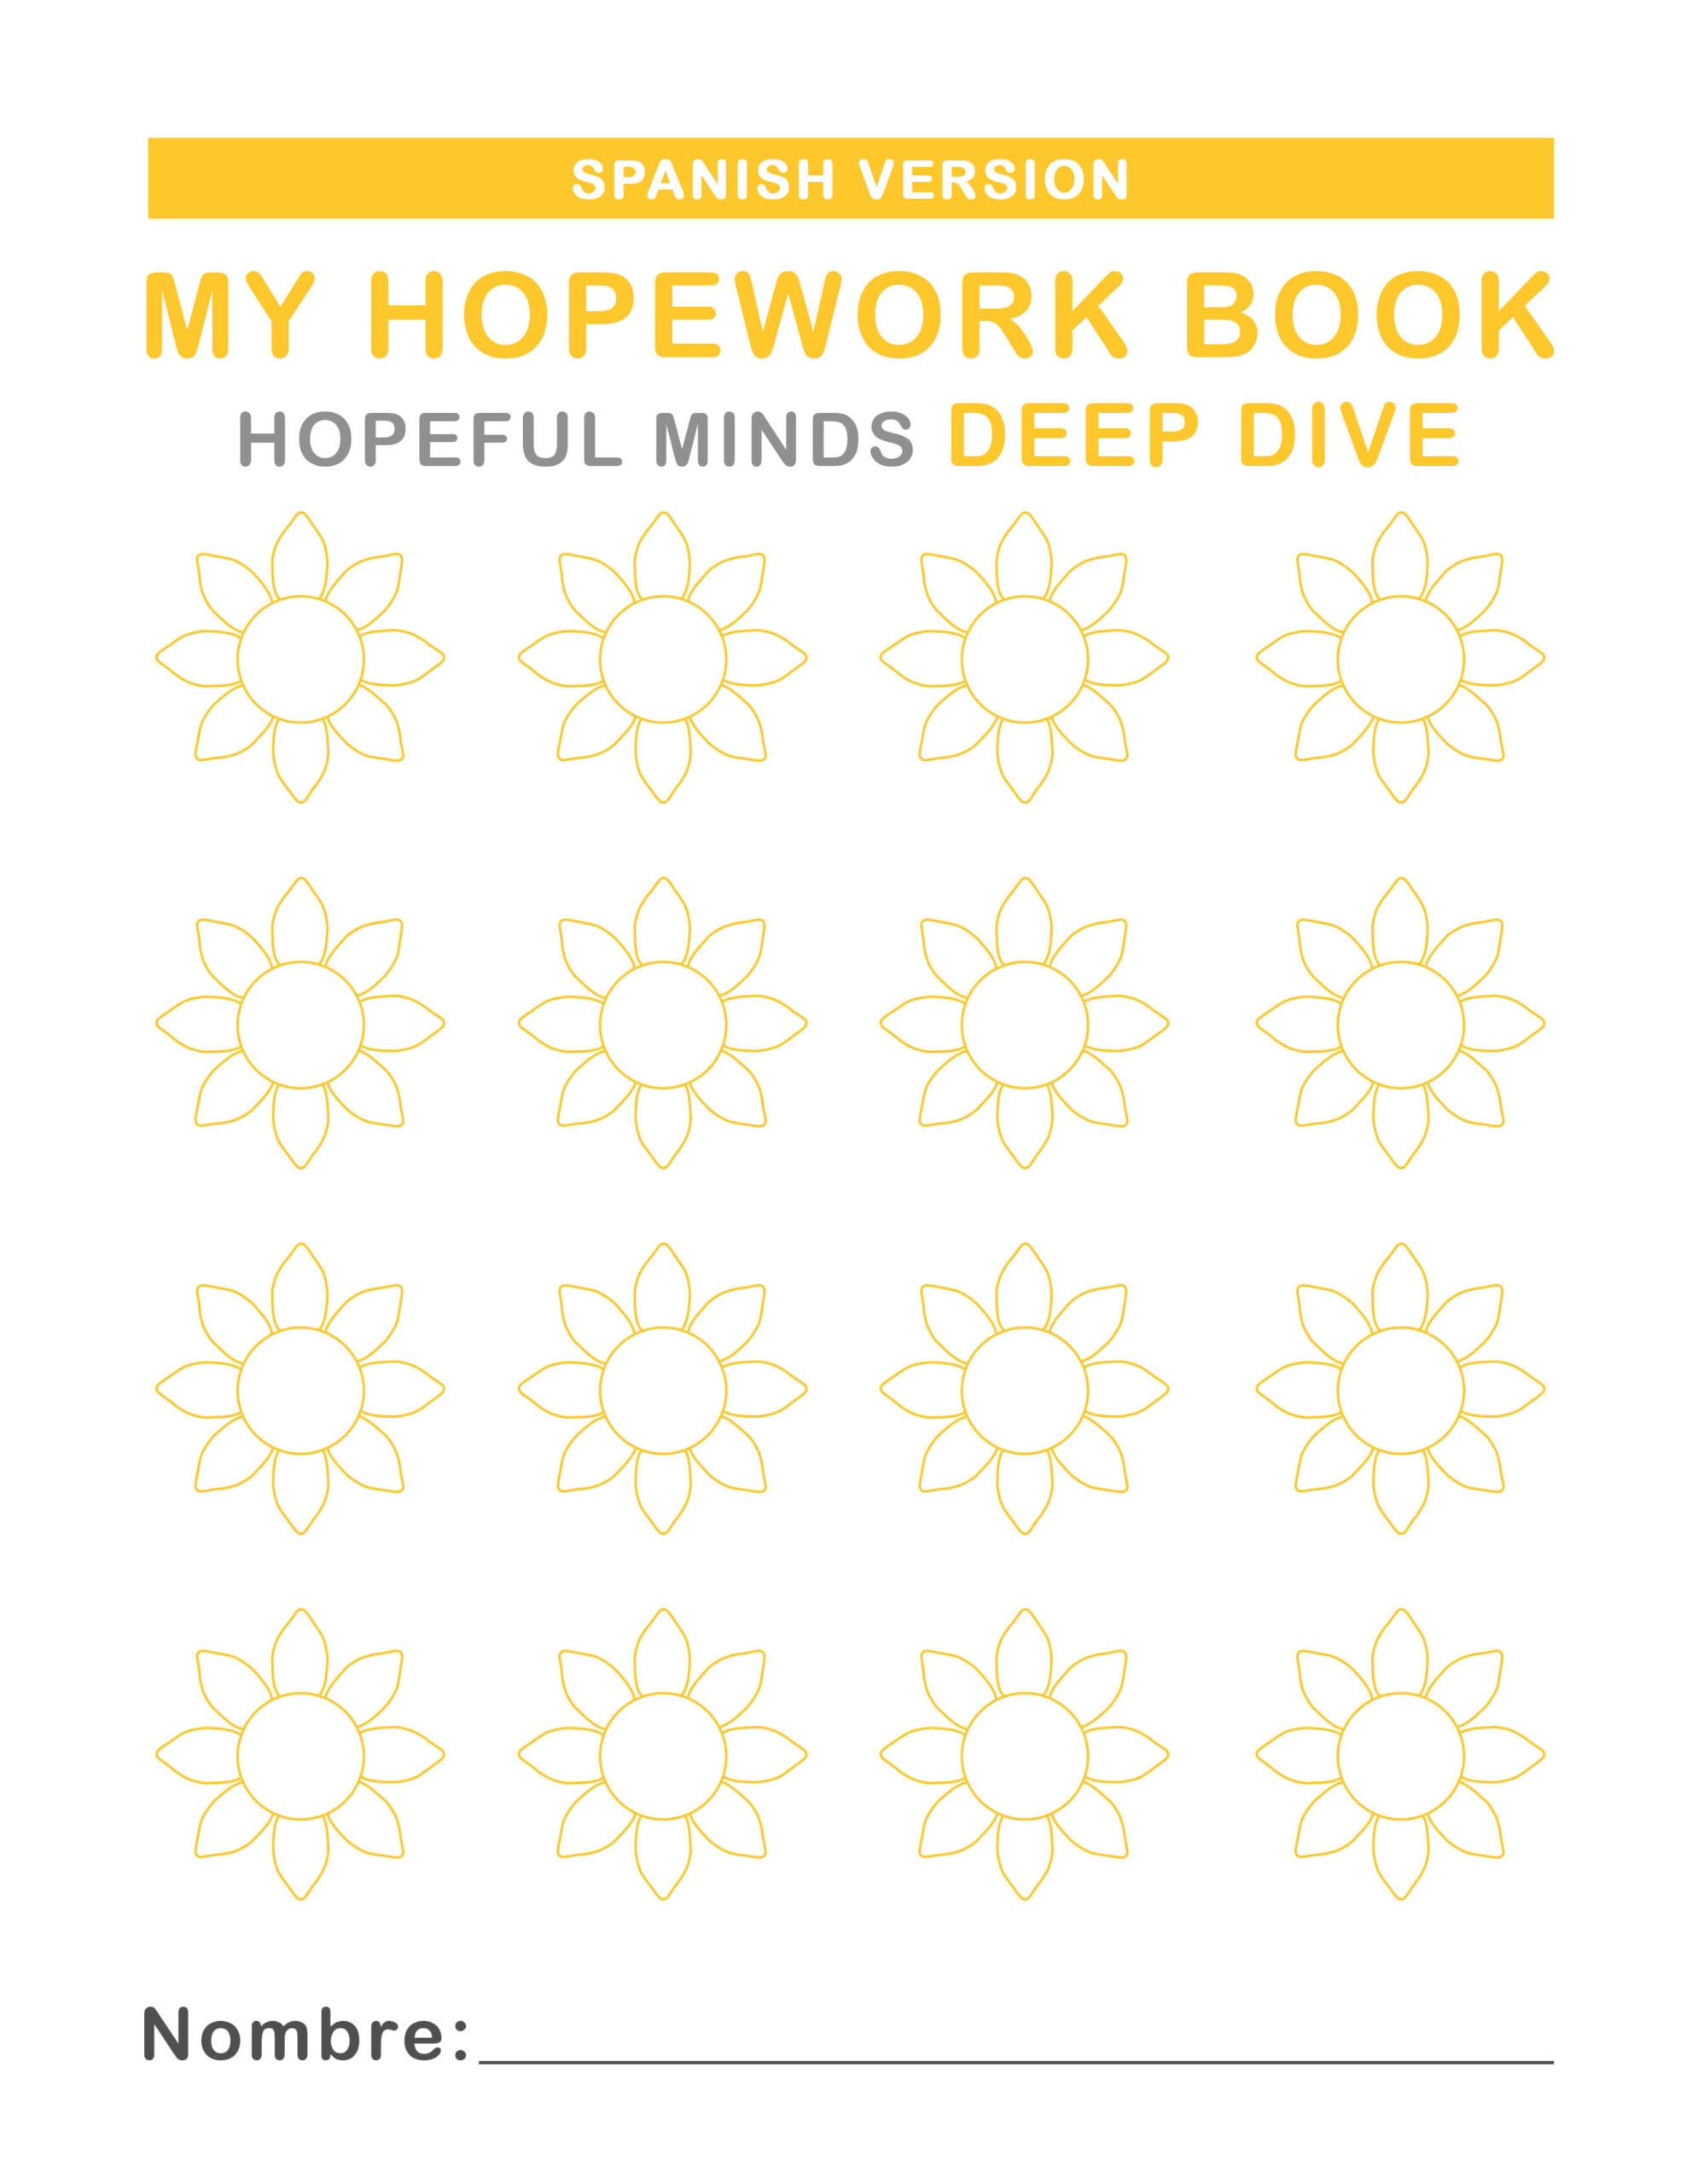 Español – Hopeful Minds Deep Dive Hopework Book